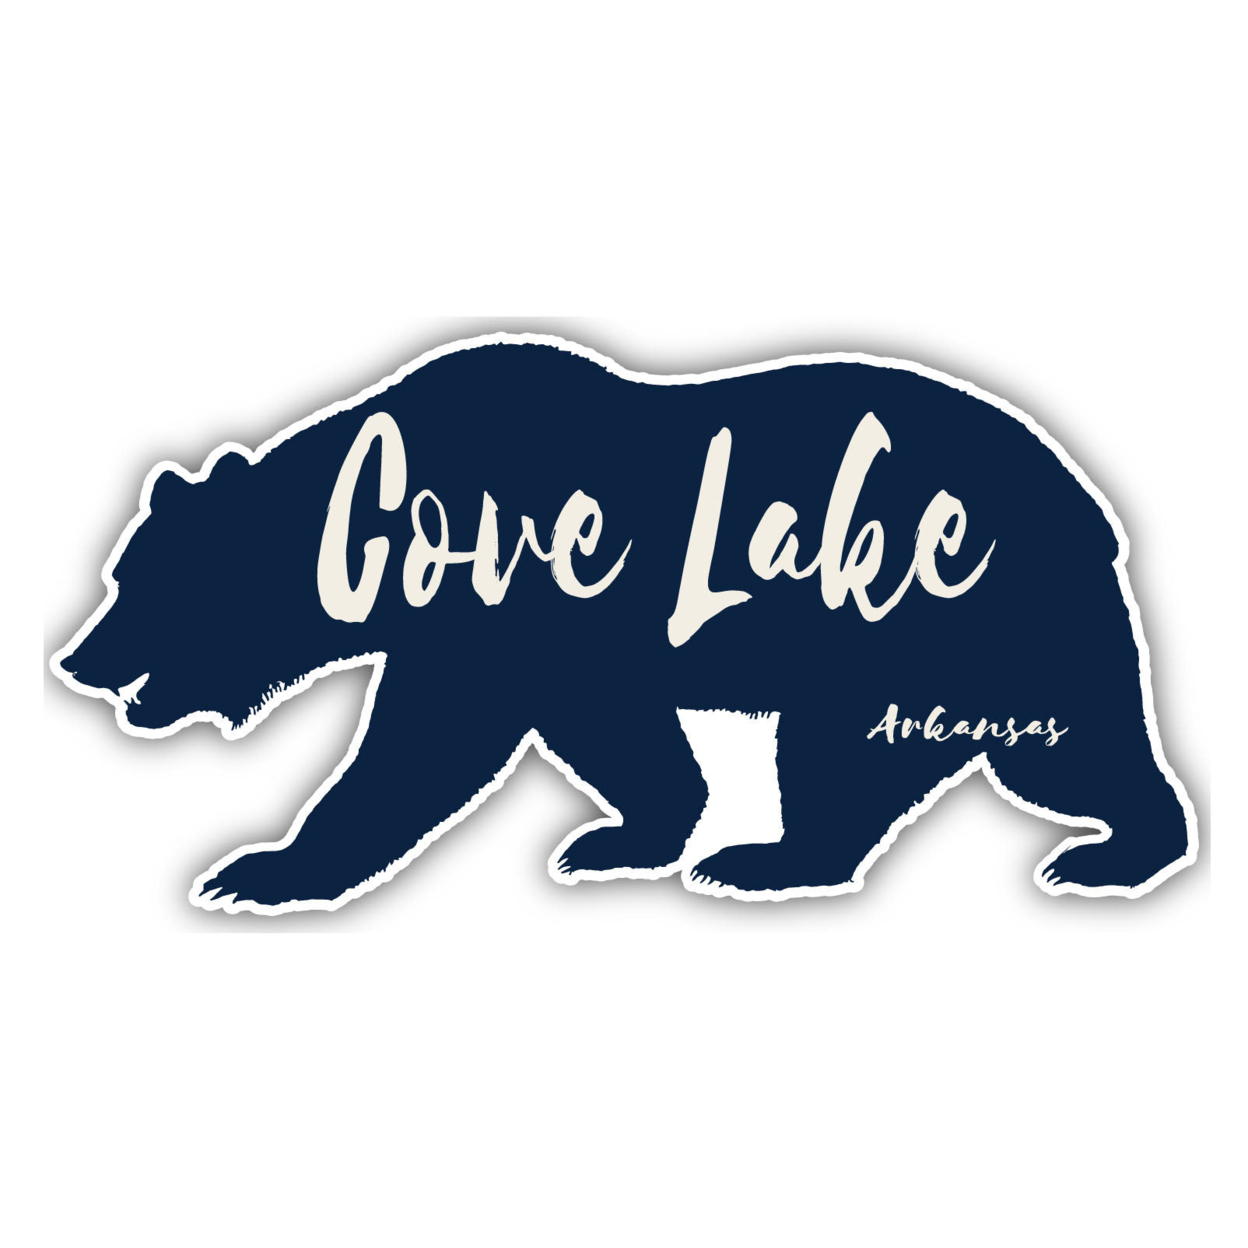 Cove Lake Arkansas Souvenir Decorative Stickers (Choose Theme And Size) - Single Unit, 8-Inch, Bear